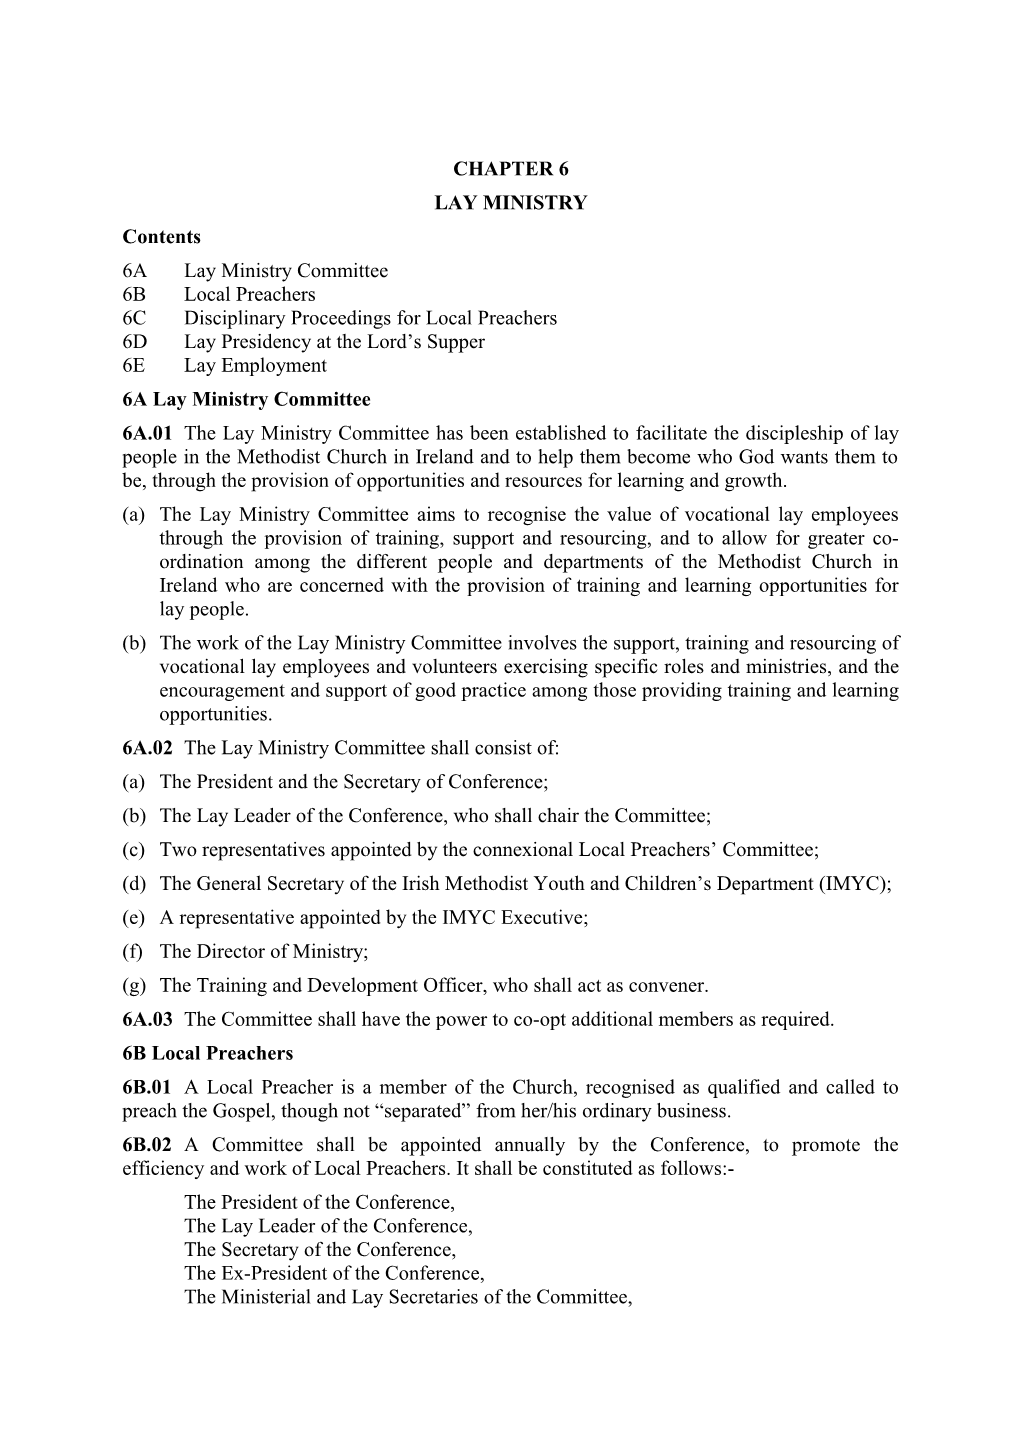 6C Disciplinary Proceedings for Local Preachers